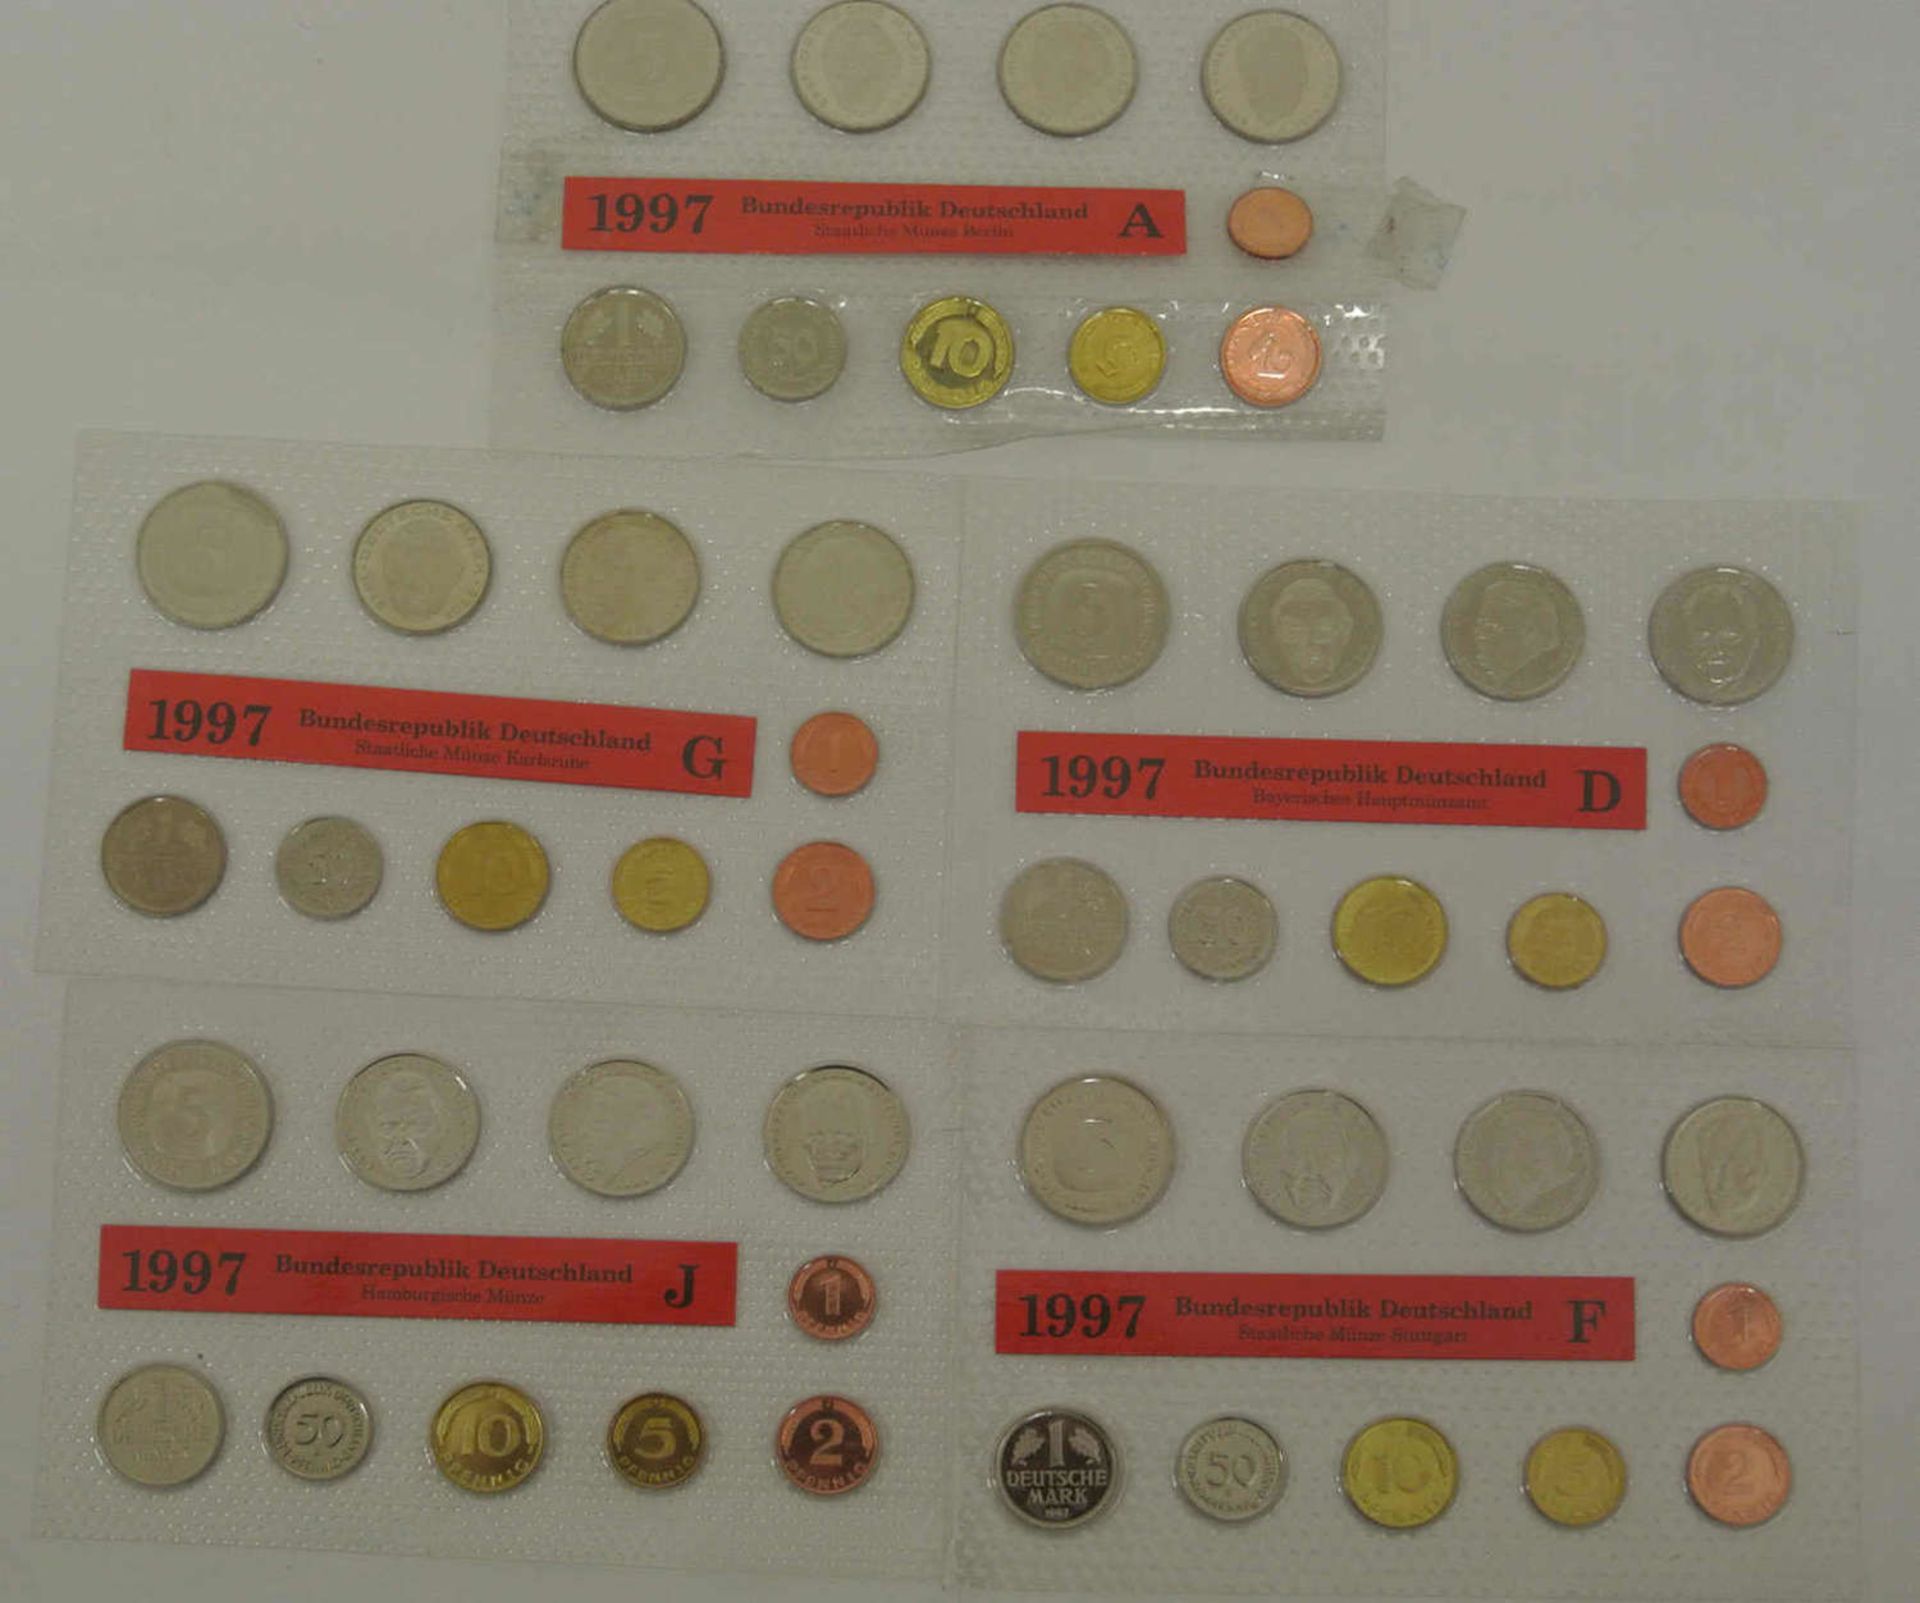 BRD Kursmünzsatz, 1997 A-J, 1 Pfennig - 5 DM, eingeschweißt BRD course coin set, 1997 A-J, 1 Pfennig